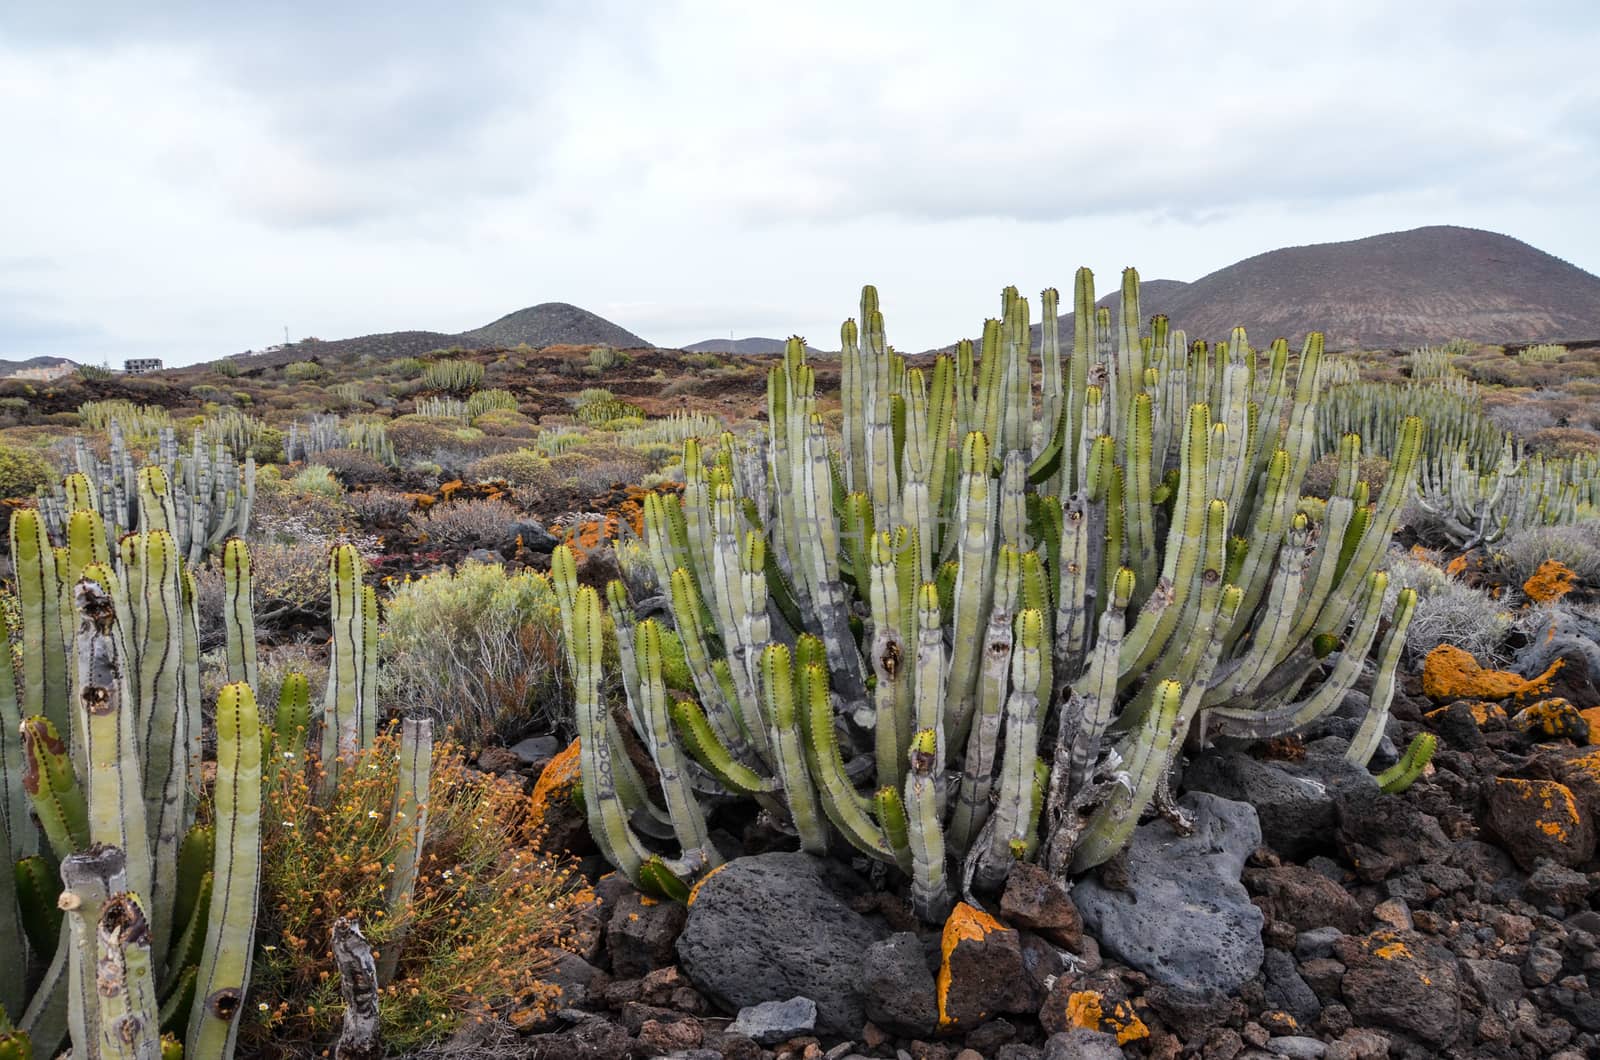 Cactus in the Desert by underworld